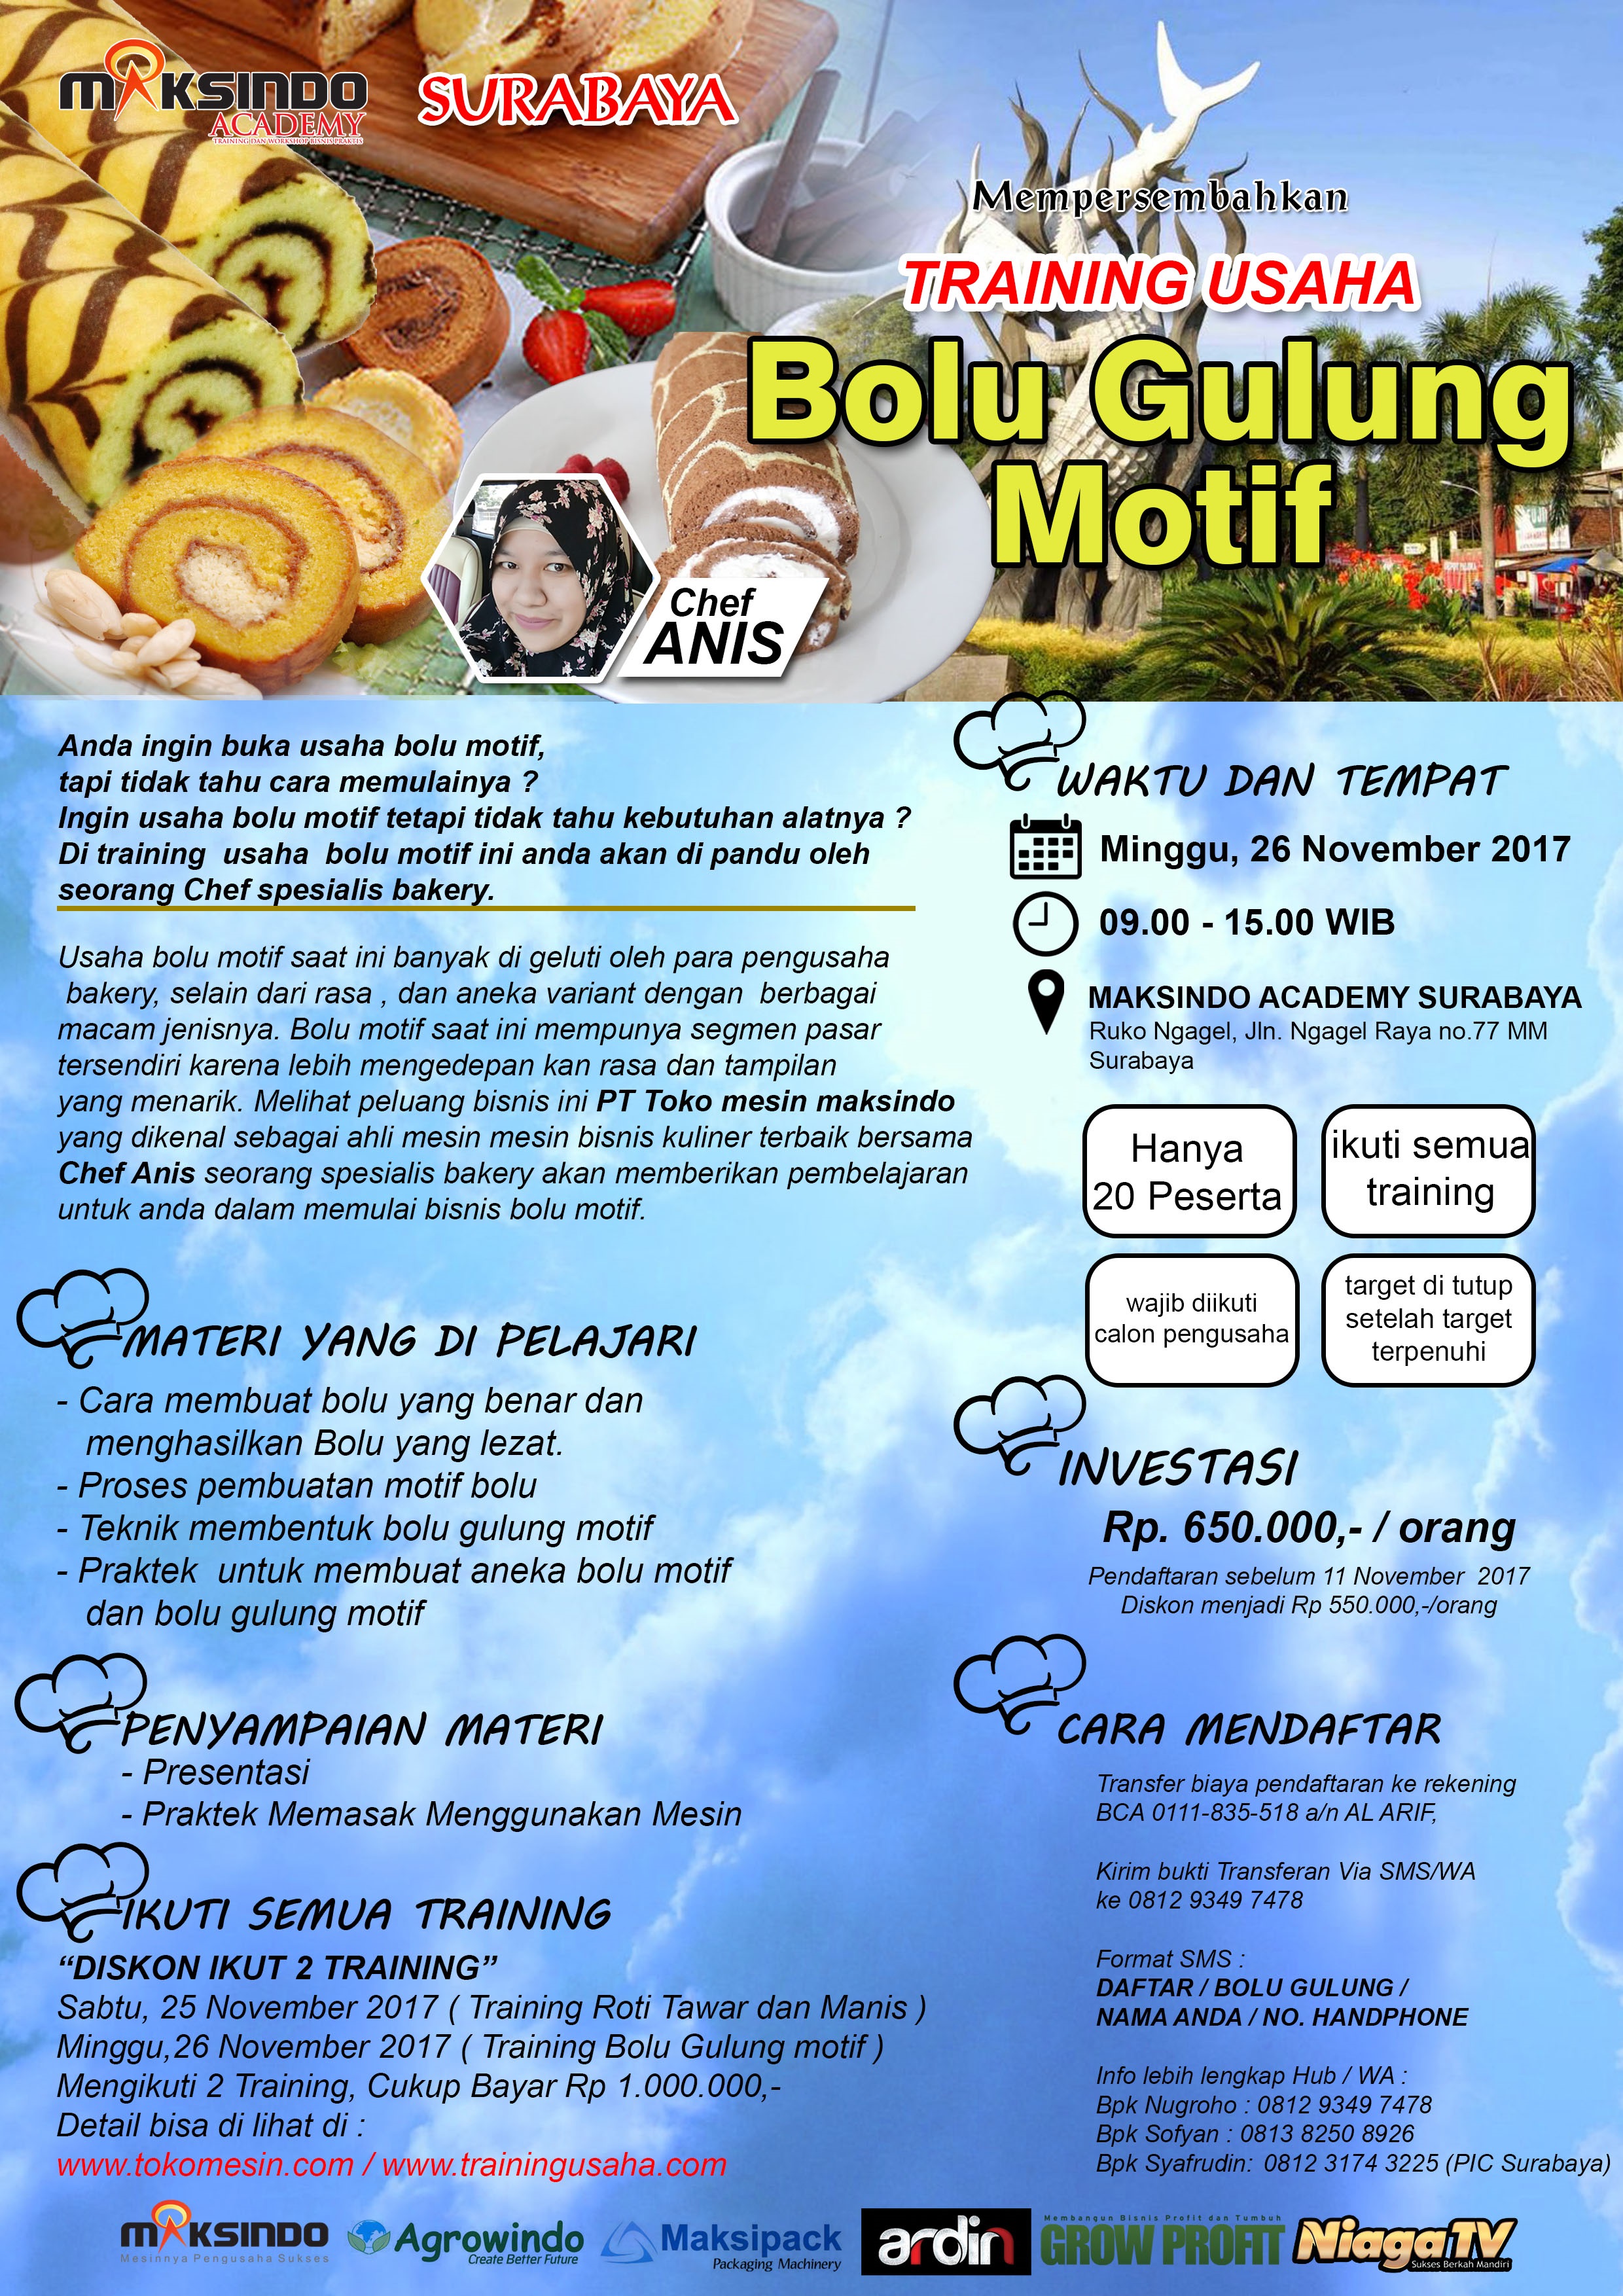 Training Bolu Gulung Motif, 26 November 2017